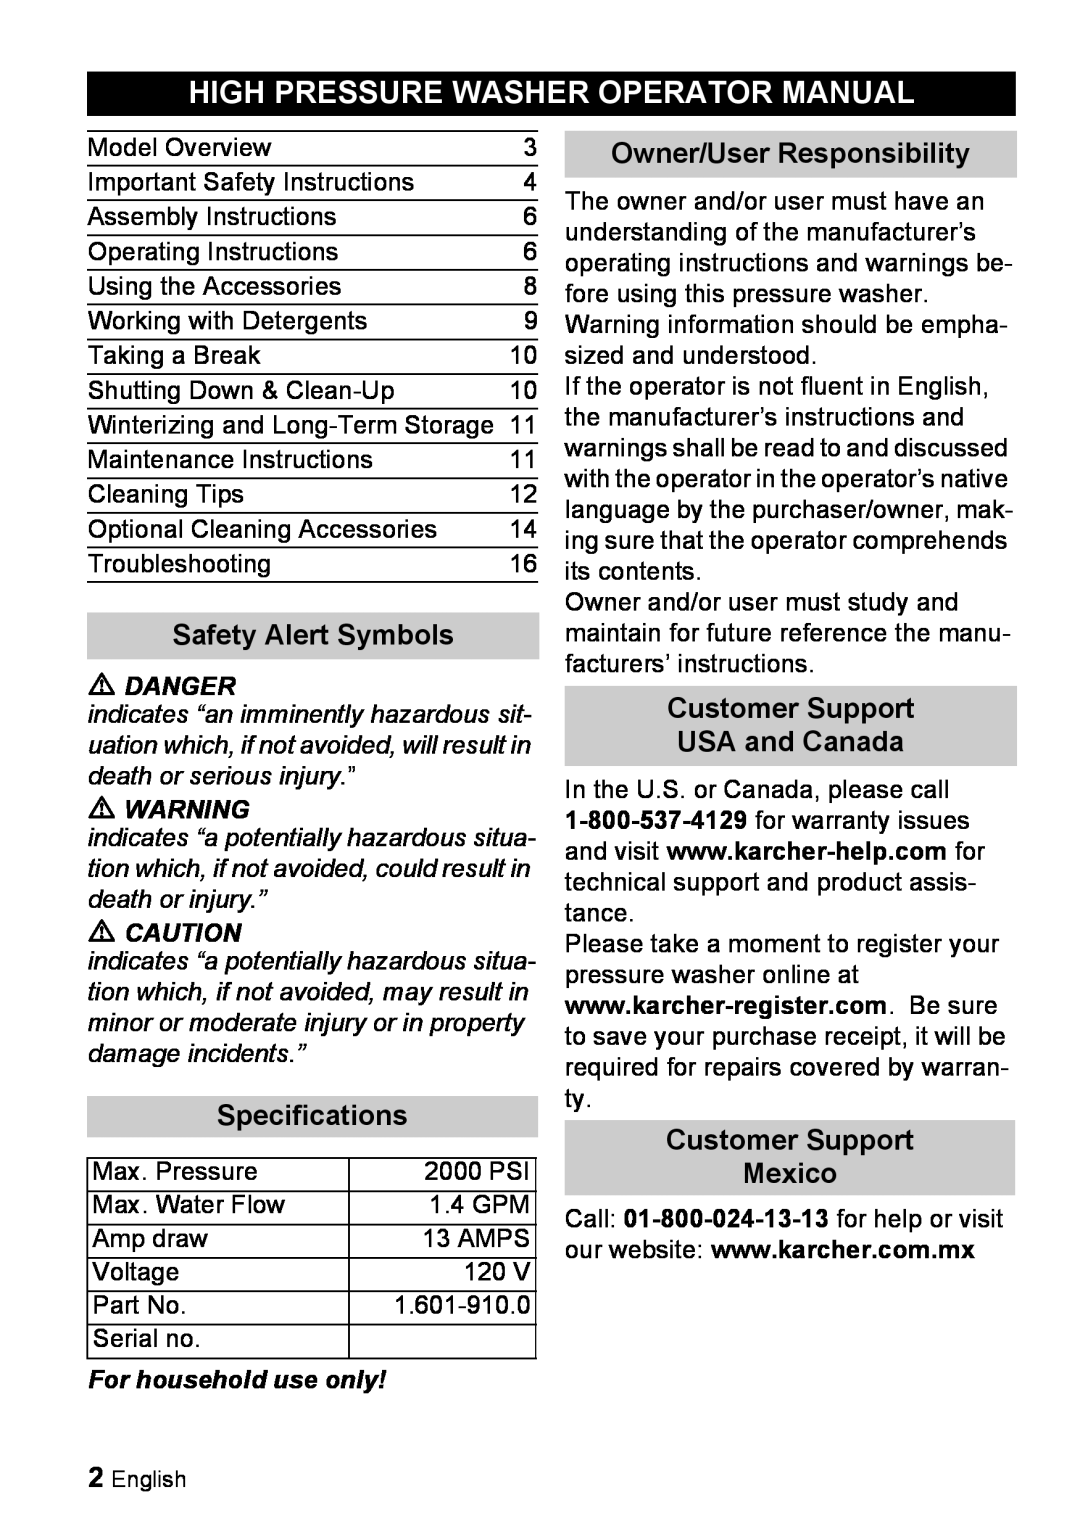 Karcher K 5.68 M High Pressure Washer Operator Manual, Safety Alert Symbols, Specifications, Owner/User Responsibility 